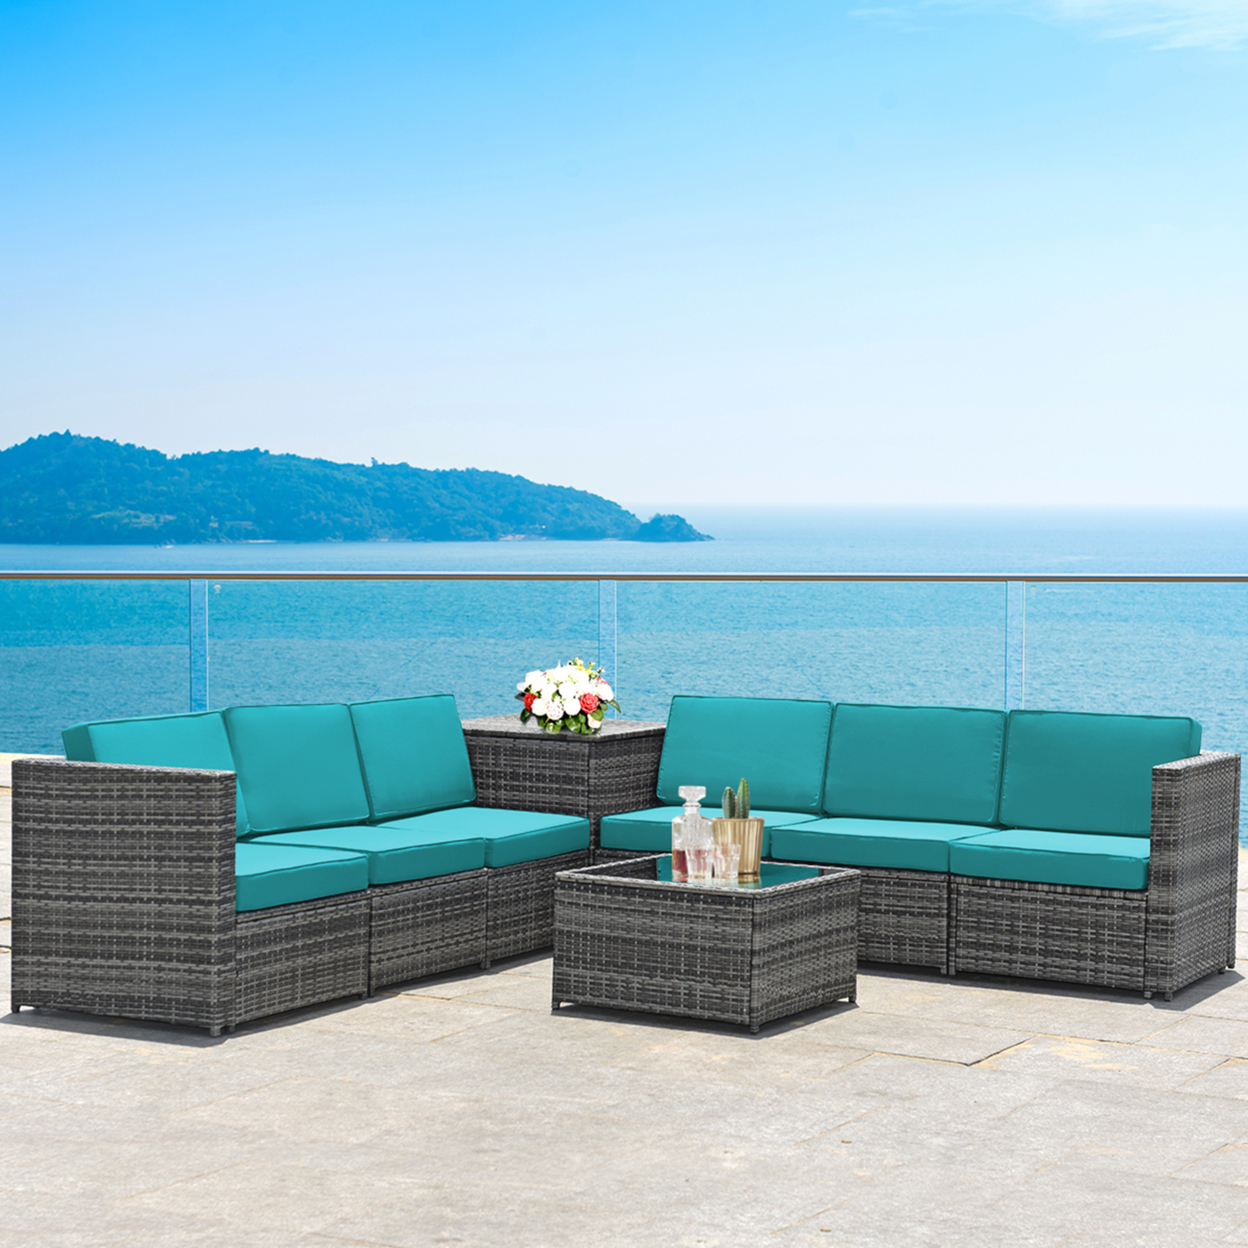 8PCS Patio Rattan Sofa Sectional Conversation Furniture Set W/ Turquoise Cushion